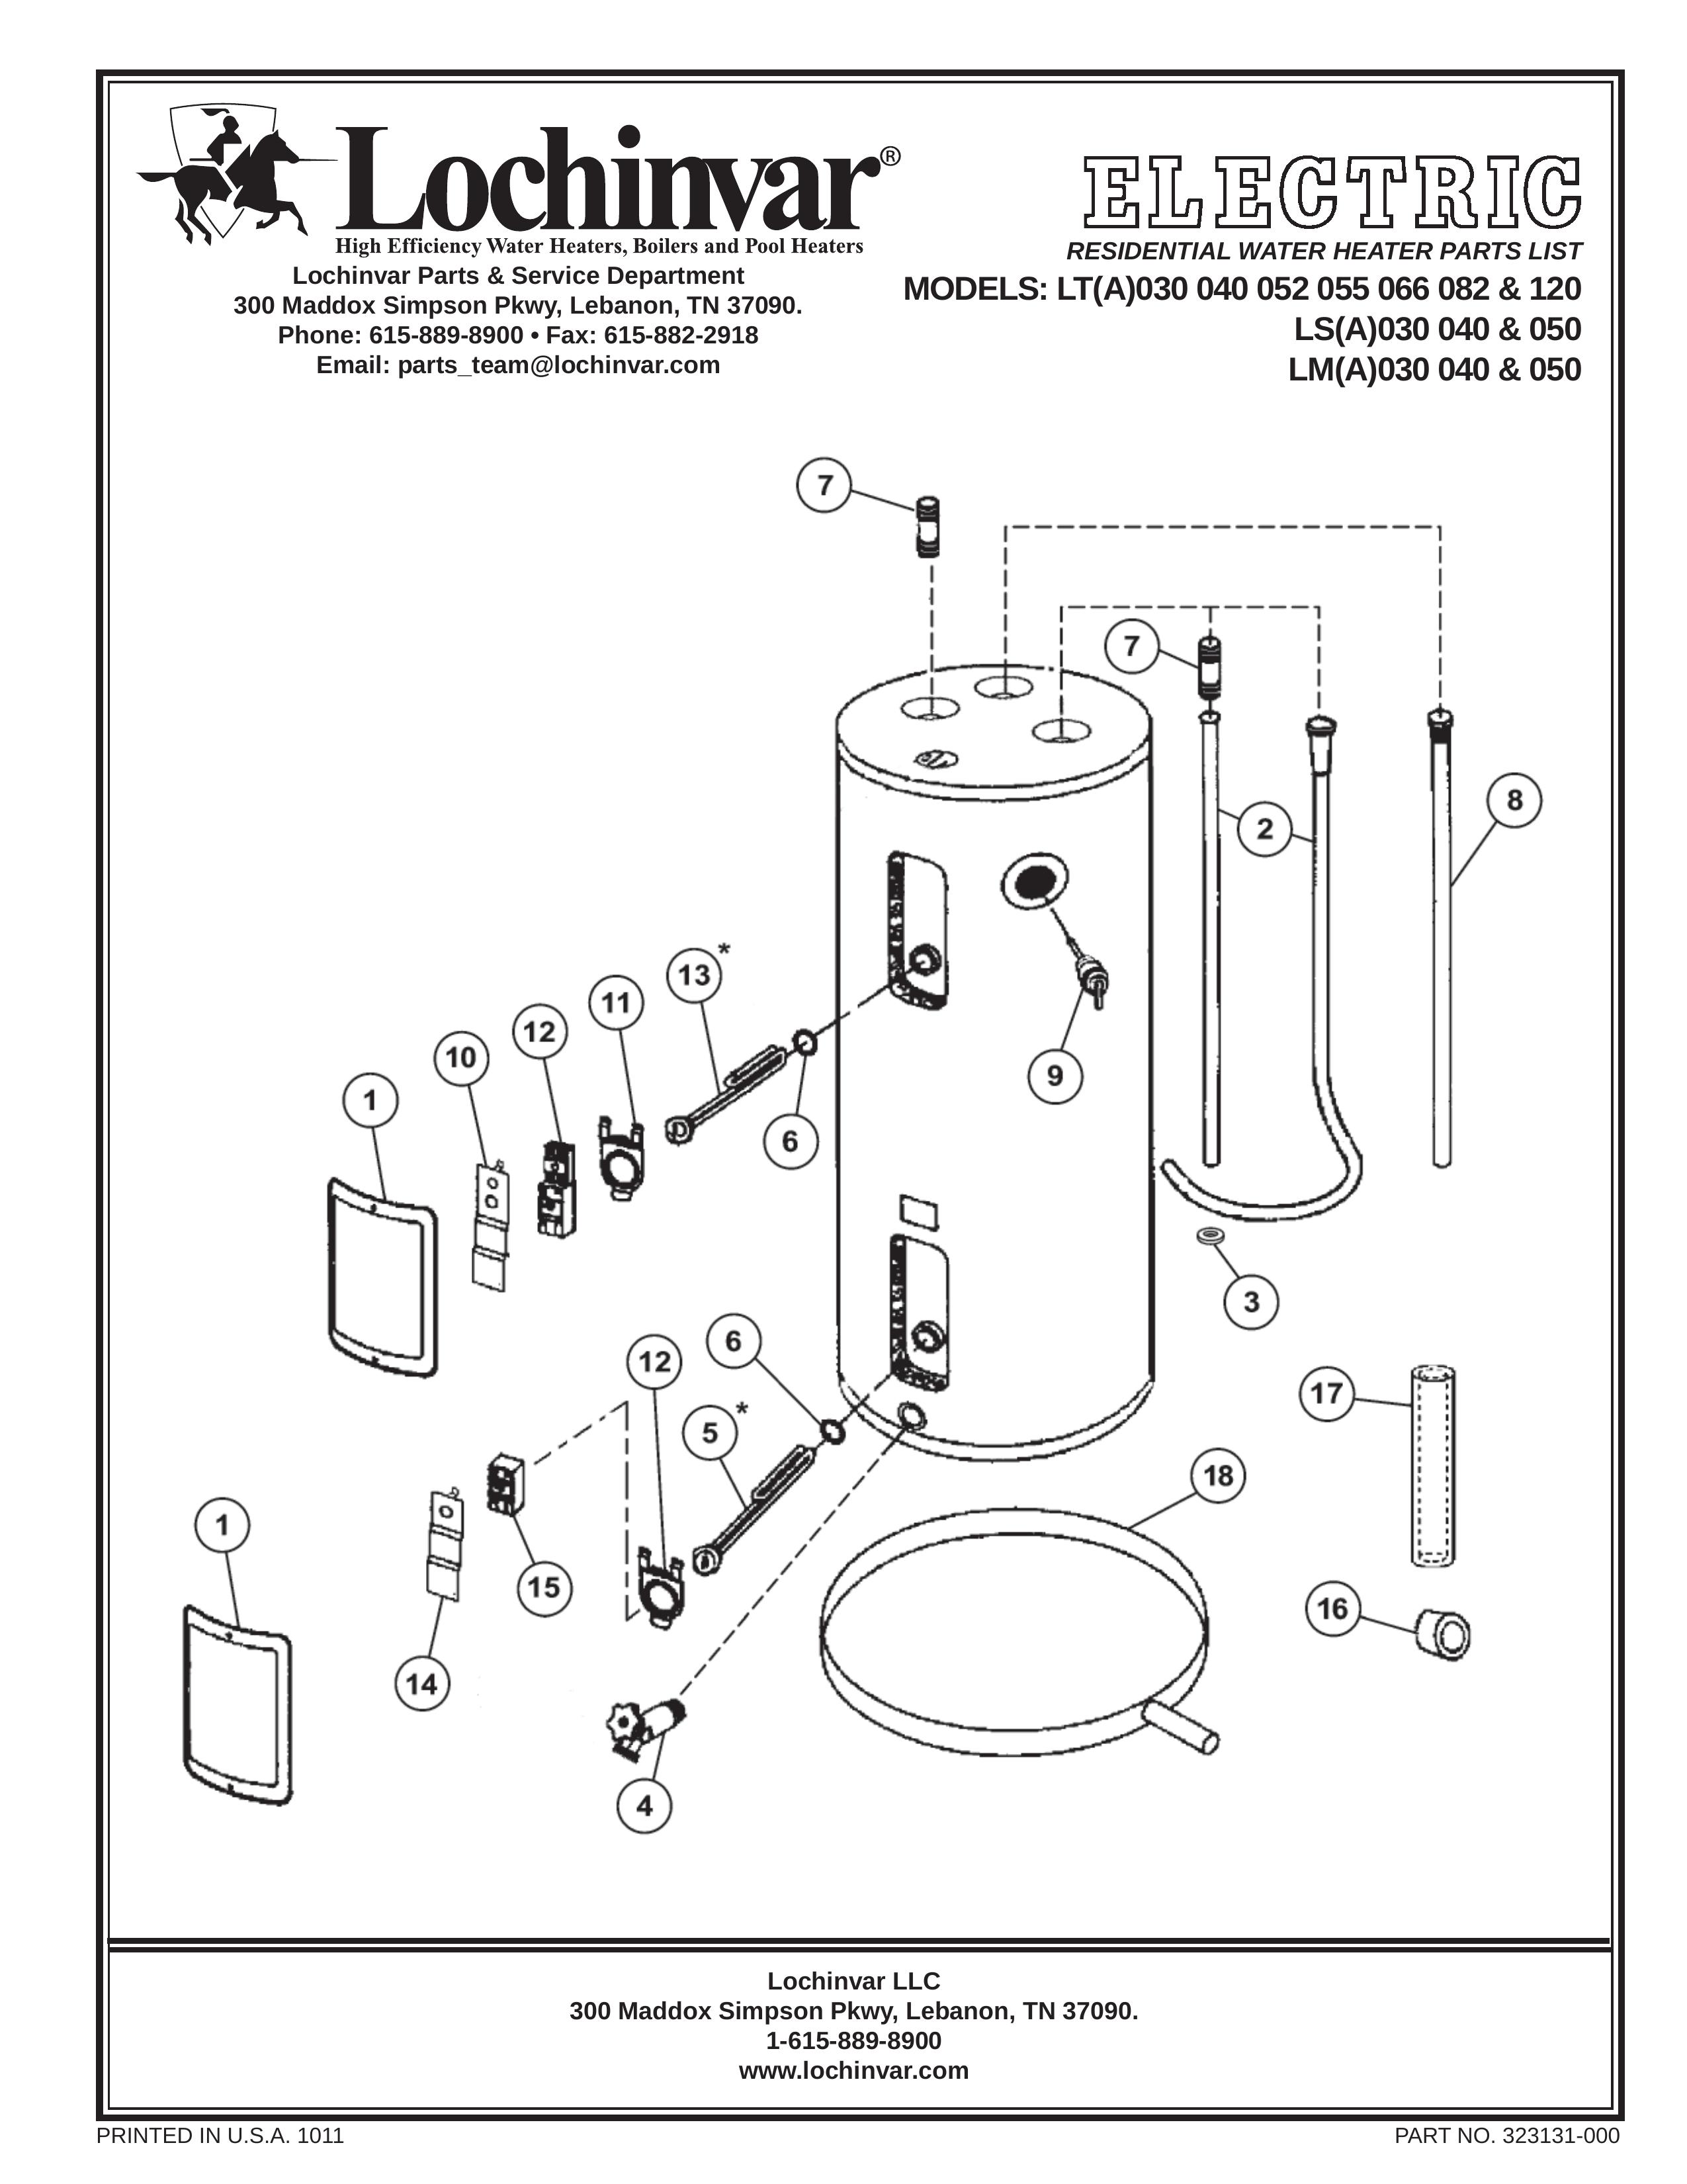 Lochinvar LT(A)030 040 052 055 066 082 & 120 LS(A)030 040 Marine Heating System User Manual